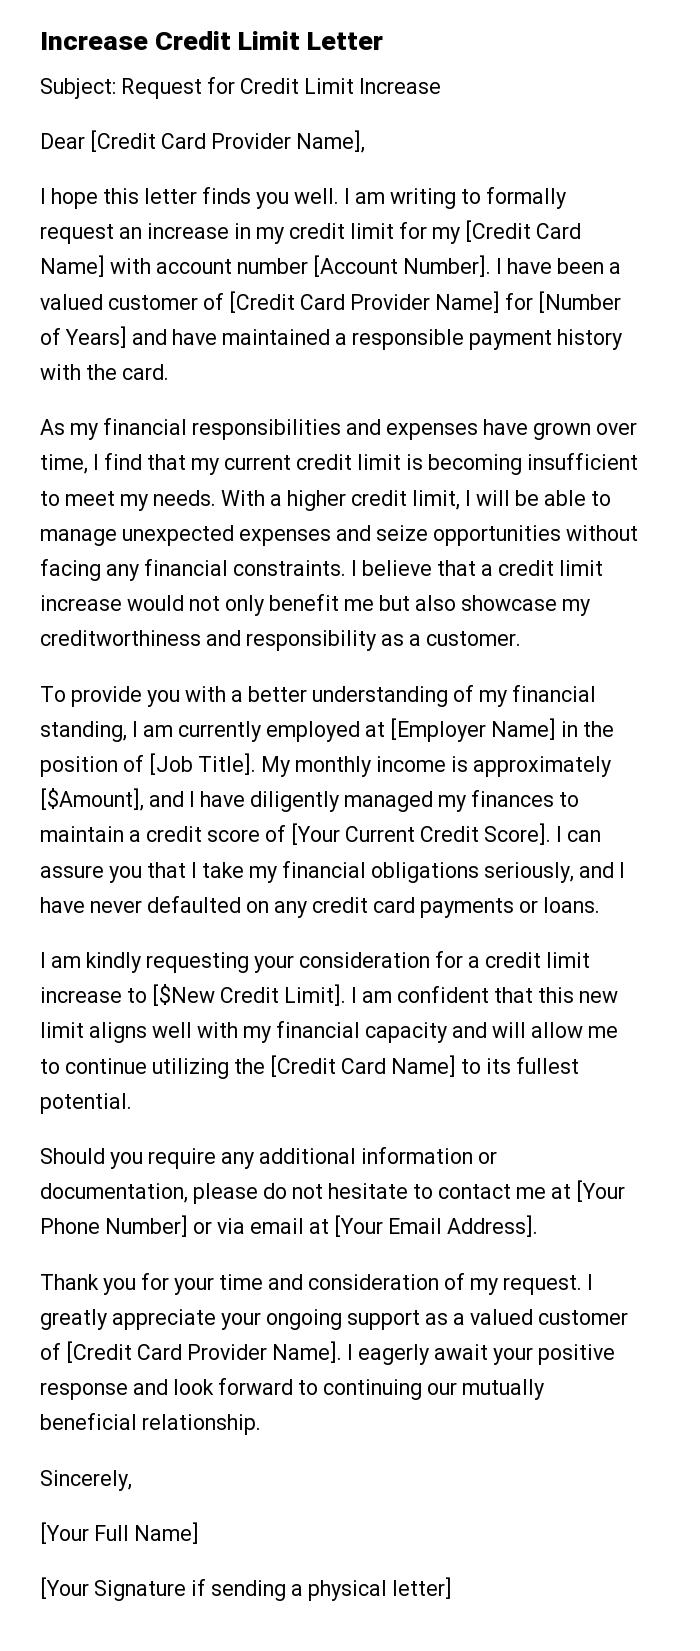 Increase Credit Limit Letter